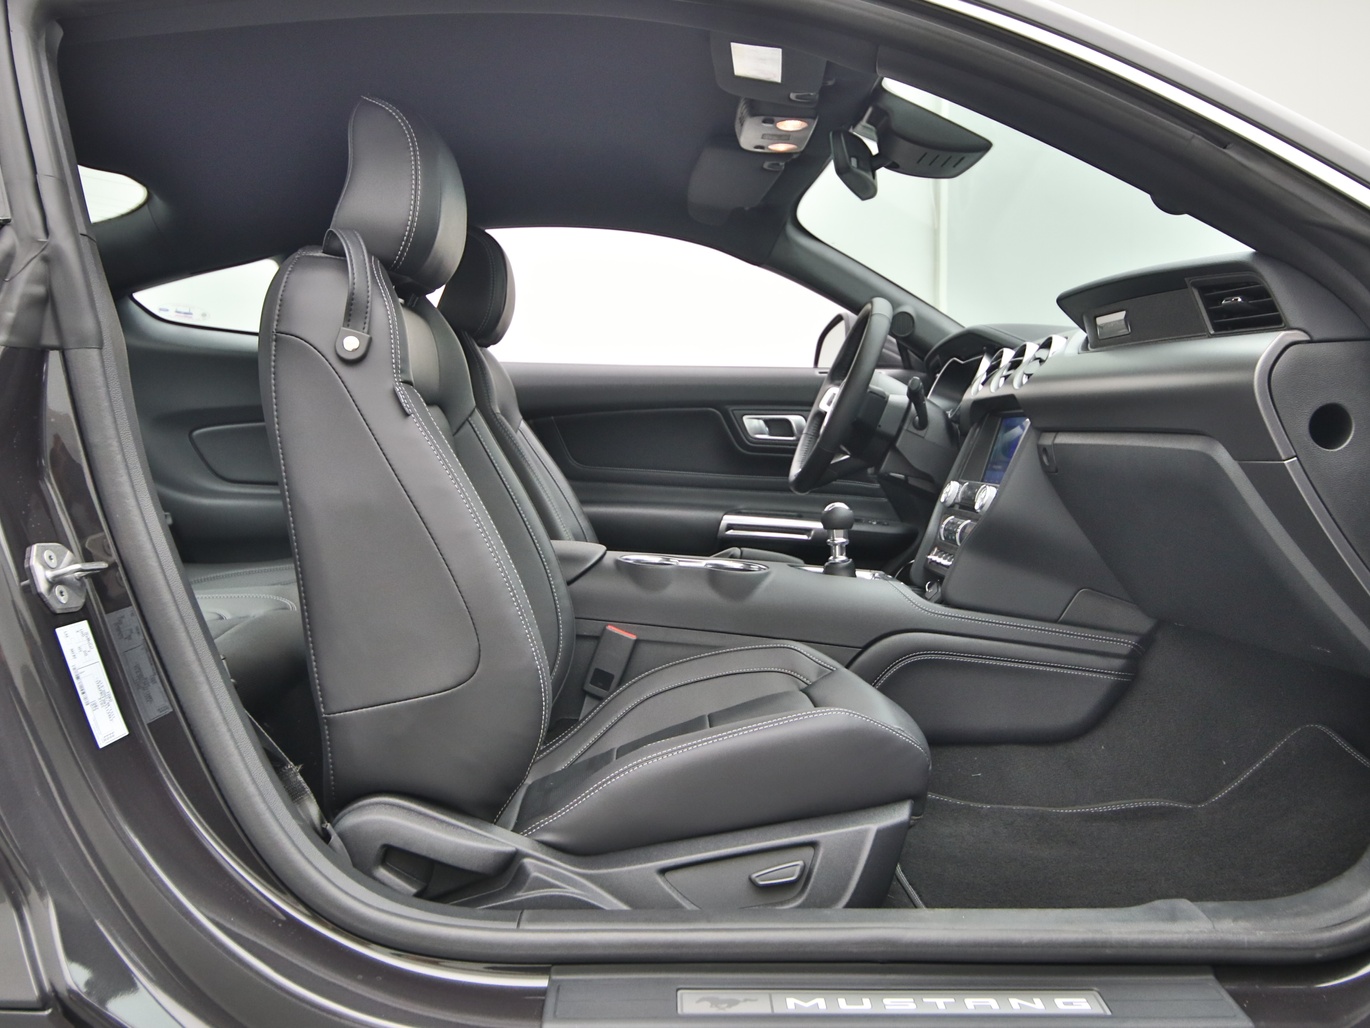  Ford Mustang GT Coupé V8 450PS / Premium 3 / B&O in Dark Matter Grey 